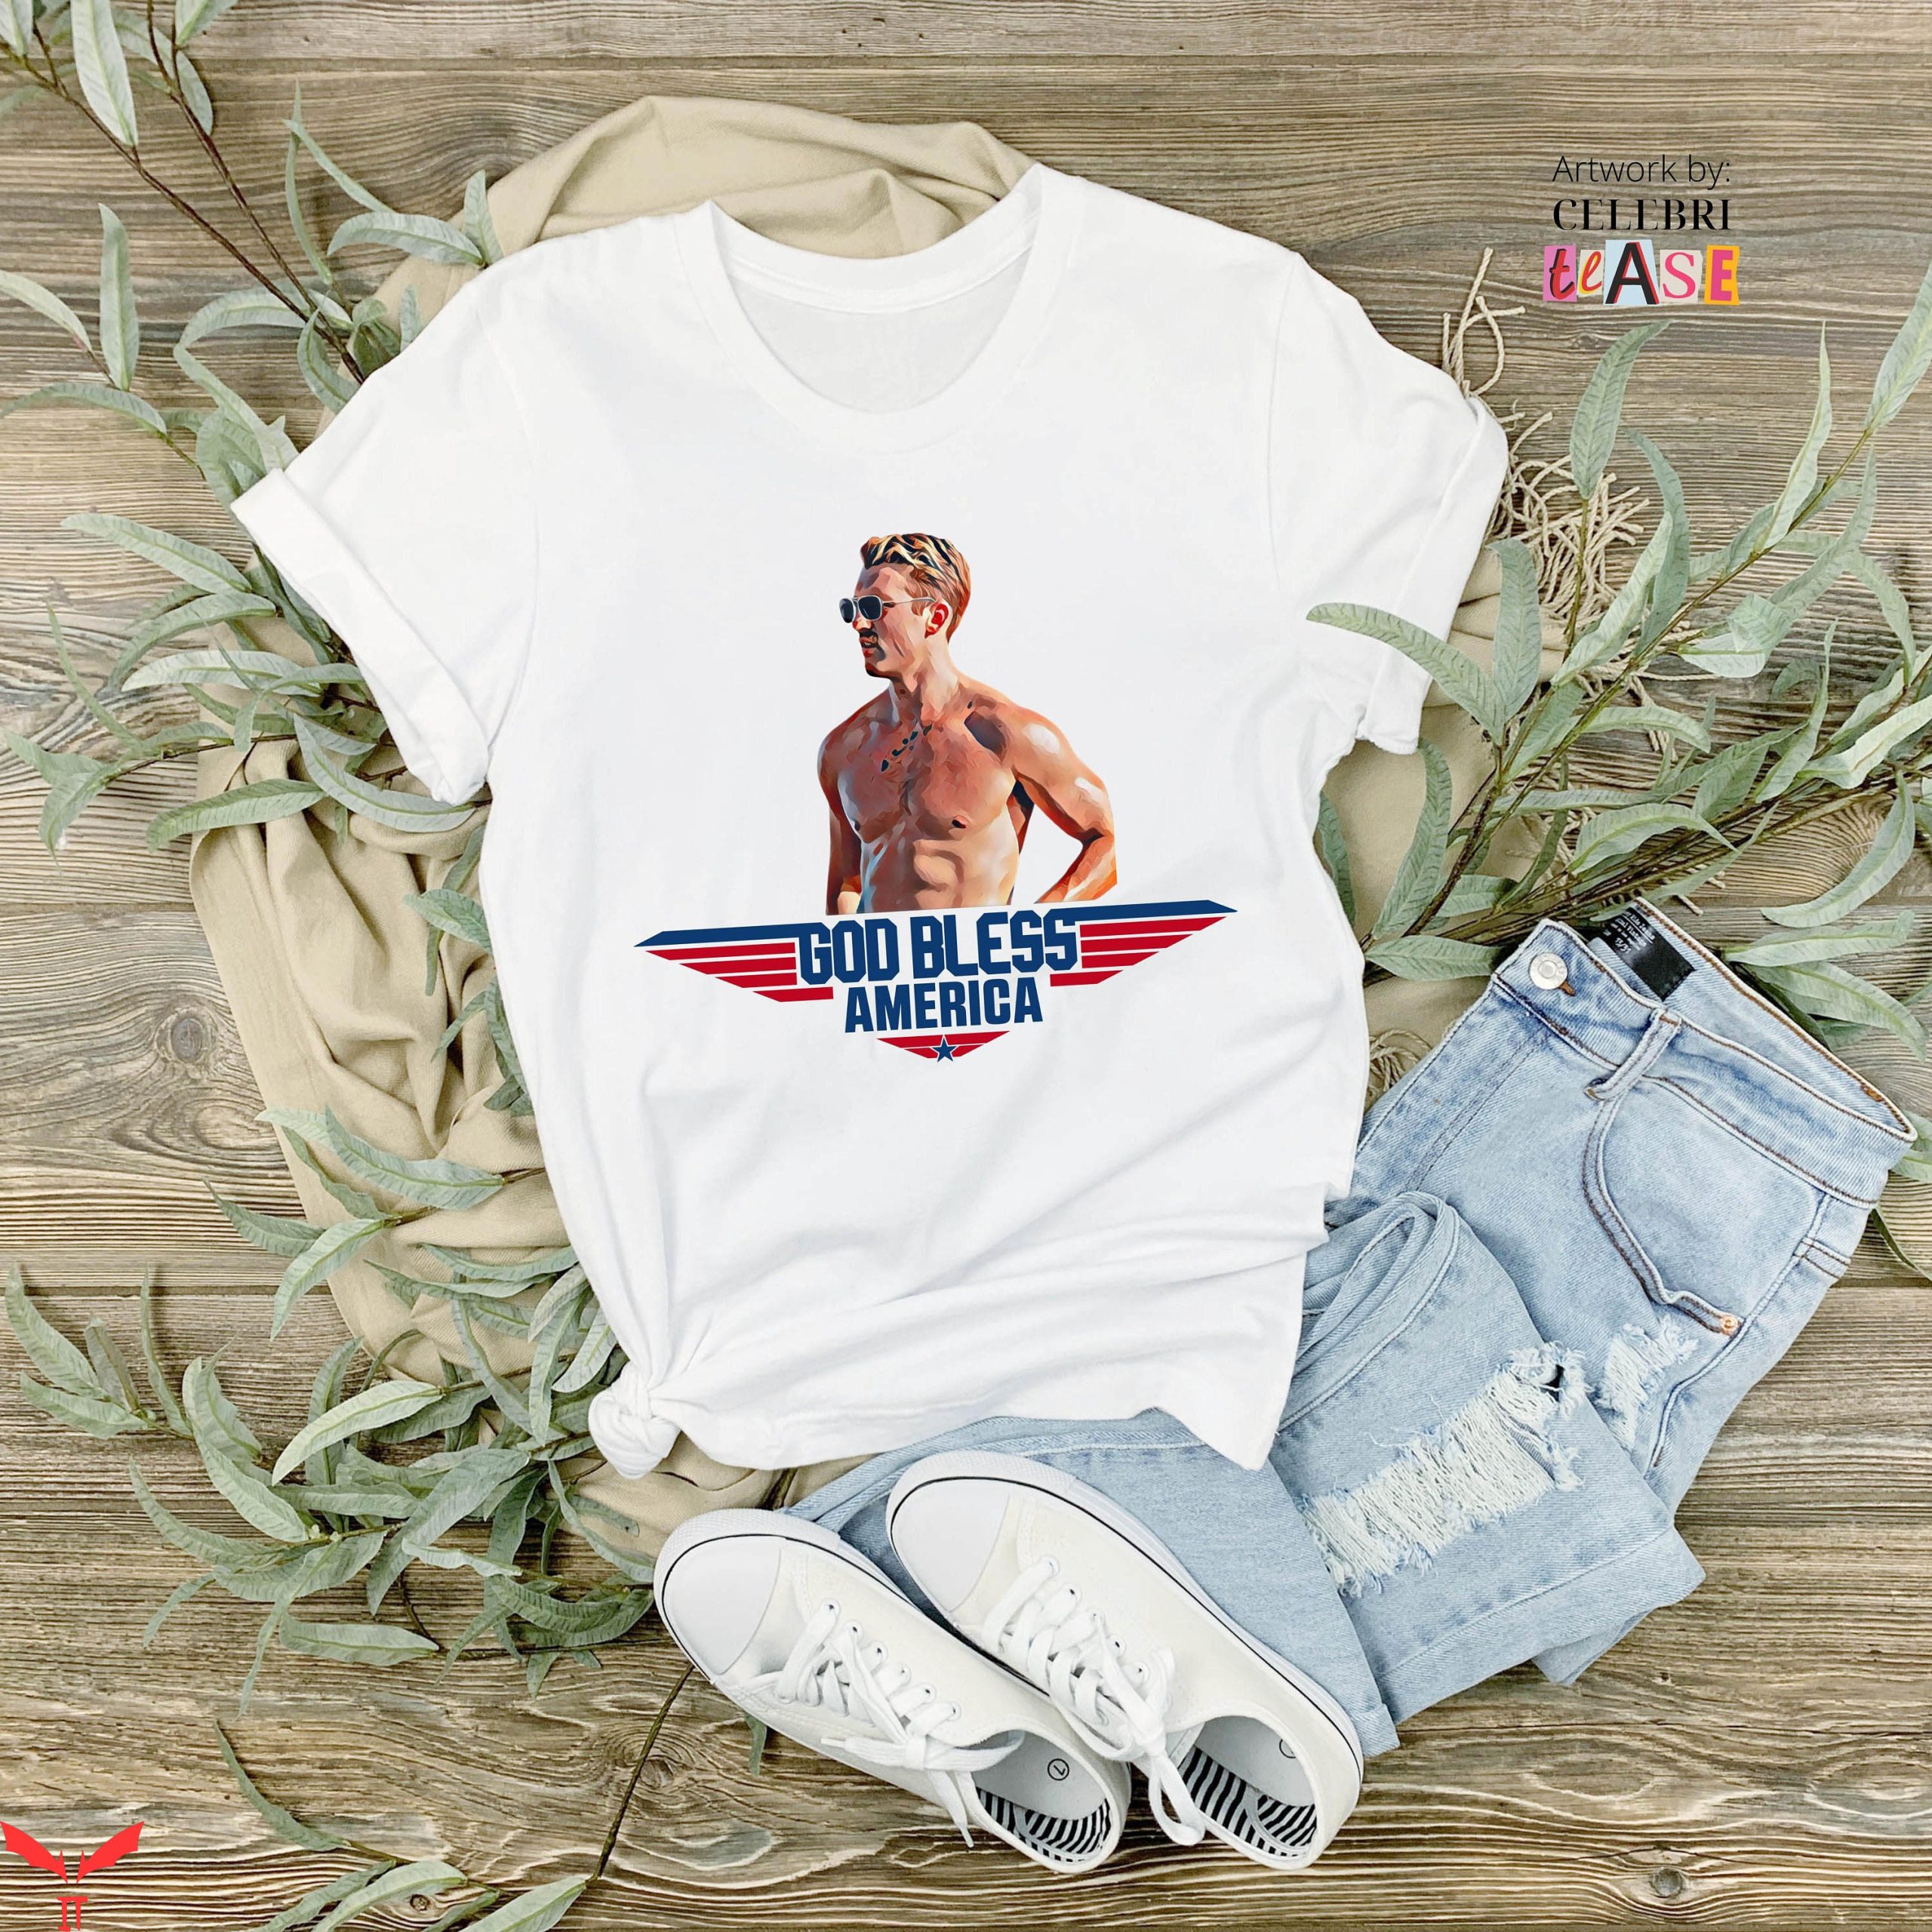 Top Gun Rooster T-Shirt Miles Teller Bradley Bradshaw